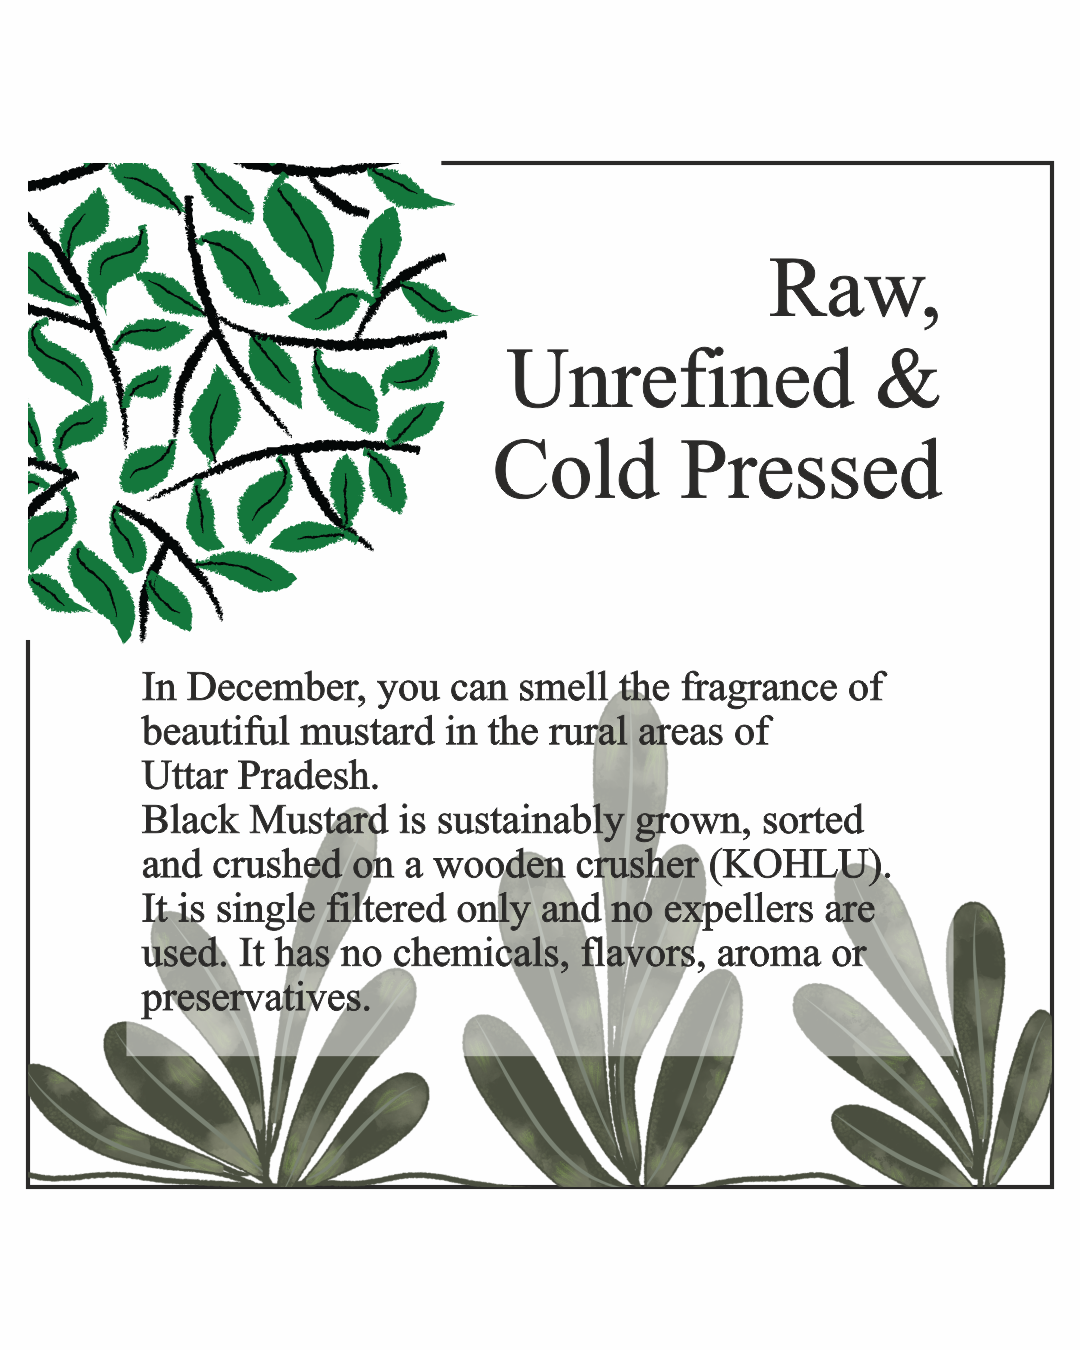 Asavi Cold Pressed Black Mustard Oil - Distacart